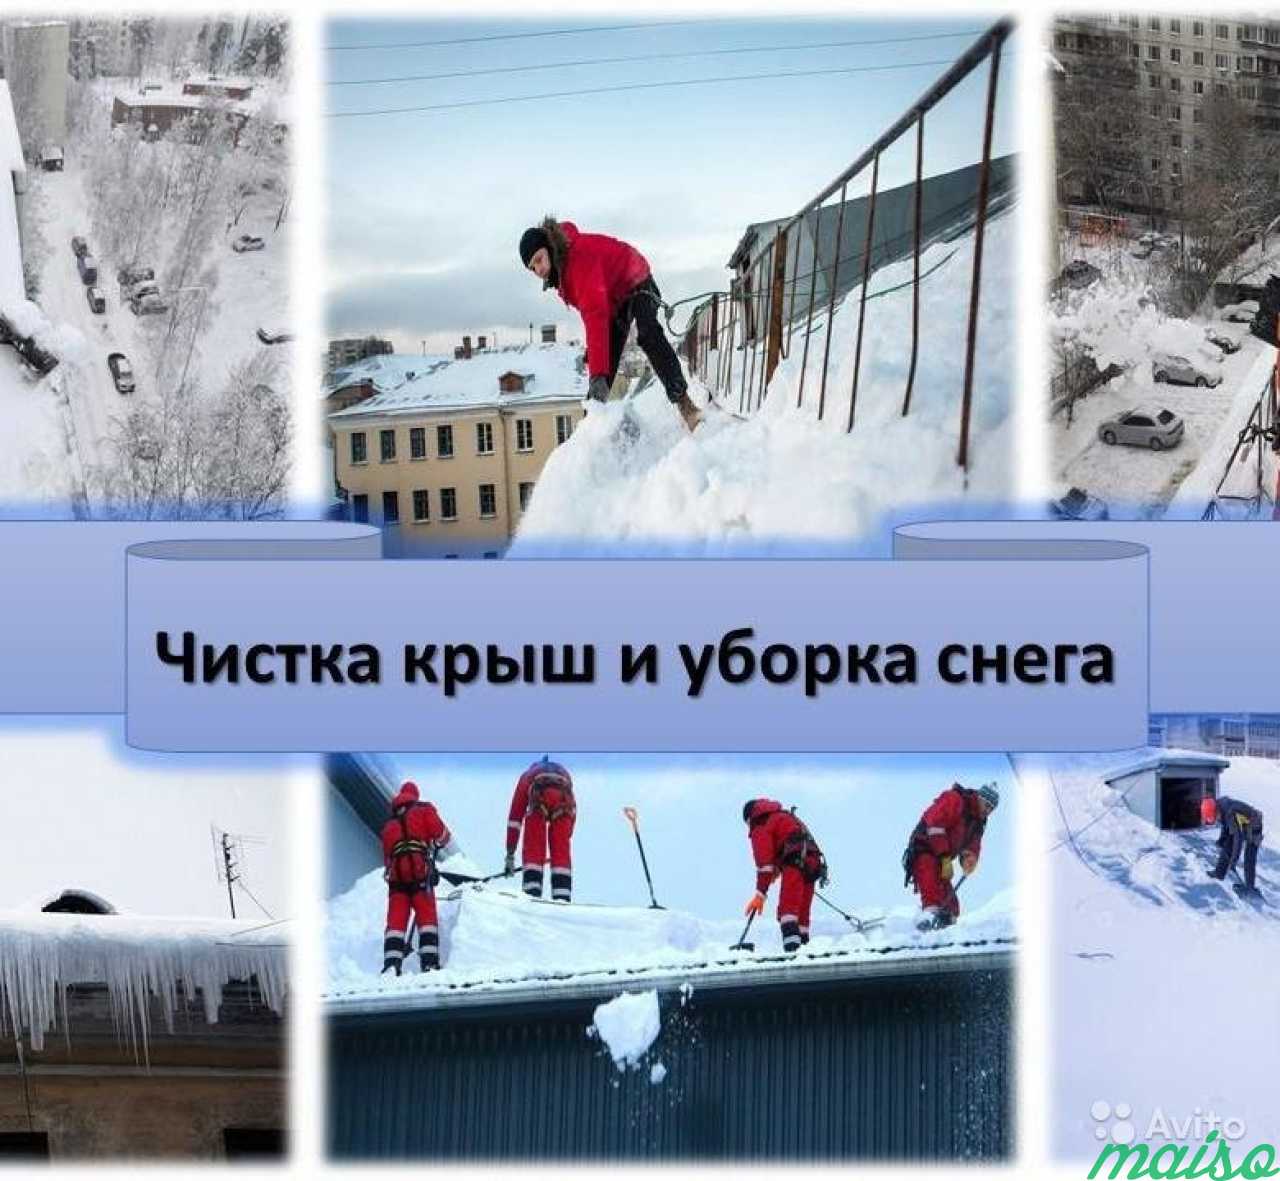 Уборка с крыш снега и наледи в Санкт-Петербурге. Фото 1